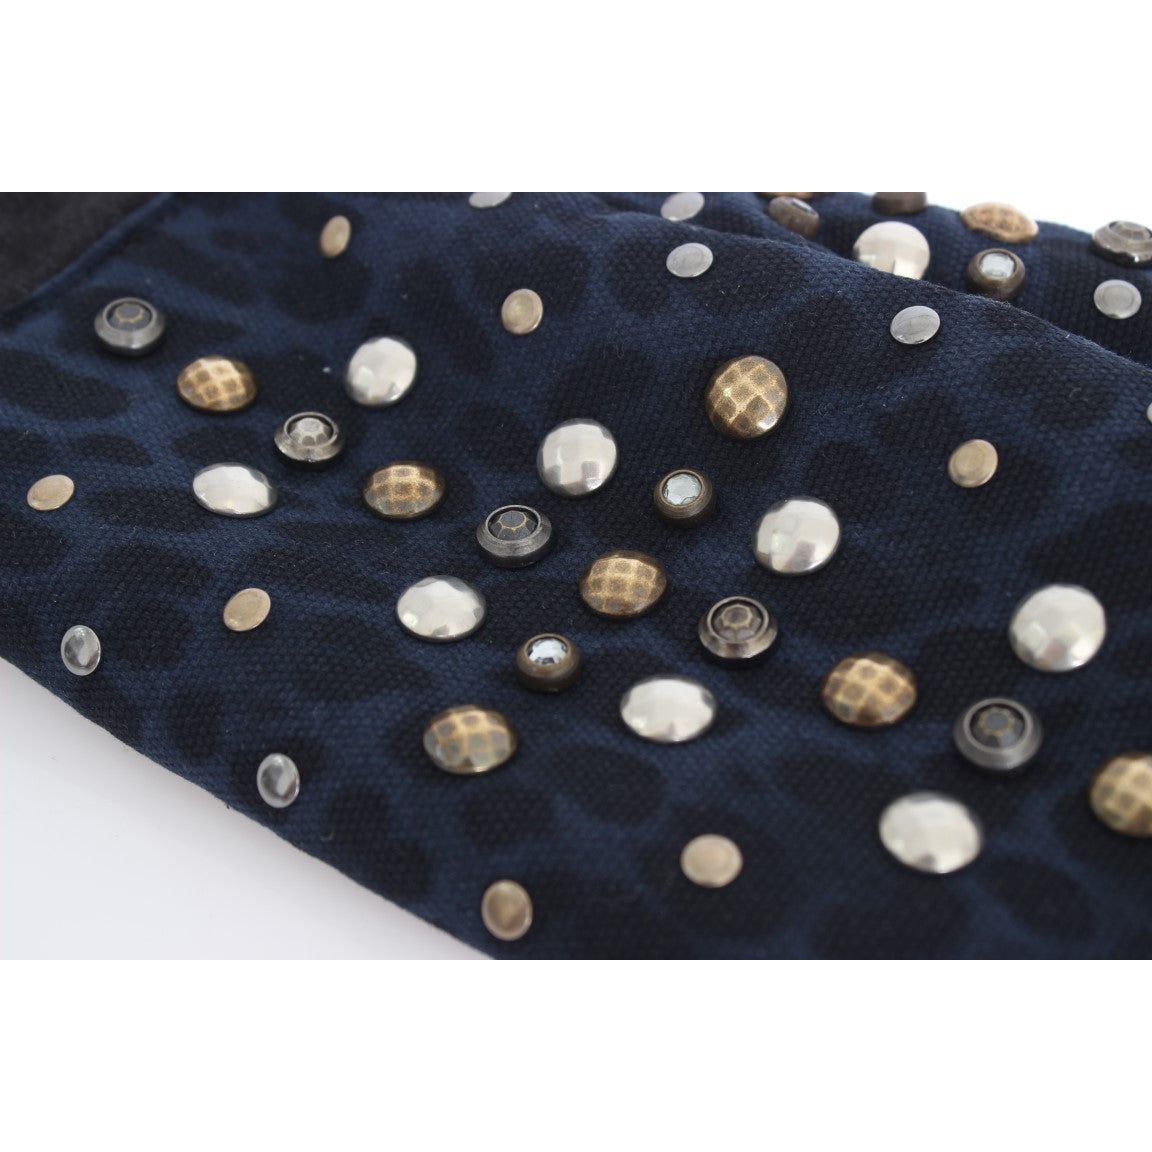 Dolce & Gabbana Chic Gray Wool & Shearling Gloves with Studded Details gray-wool-shearling-studded-blue-leopard-gloves